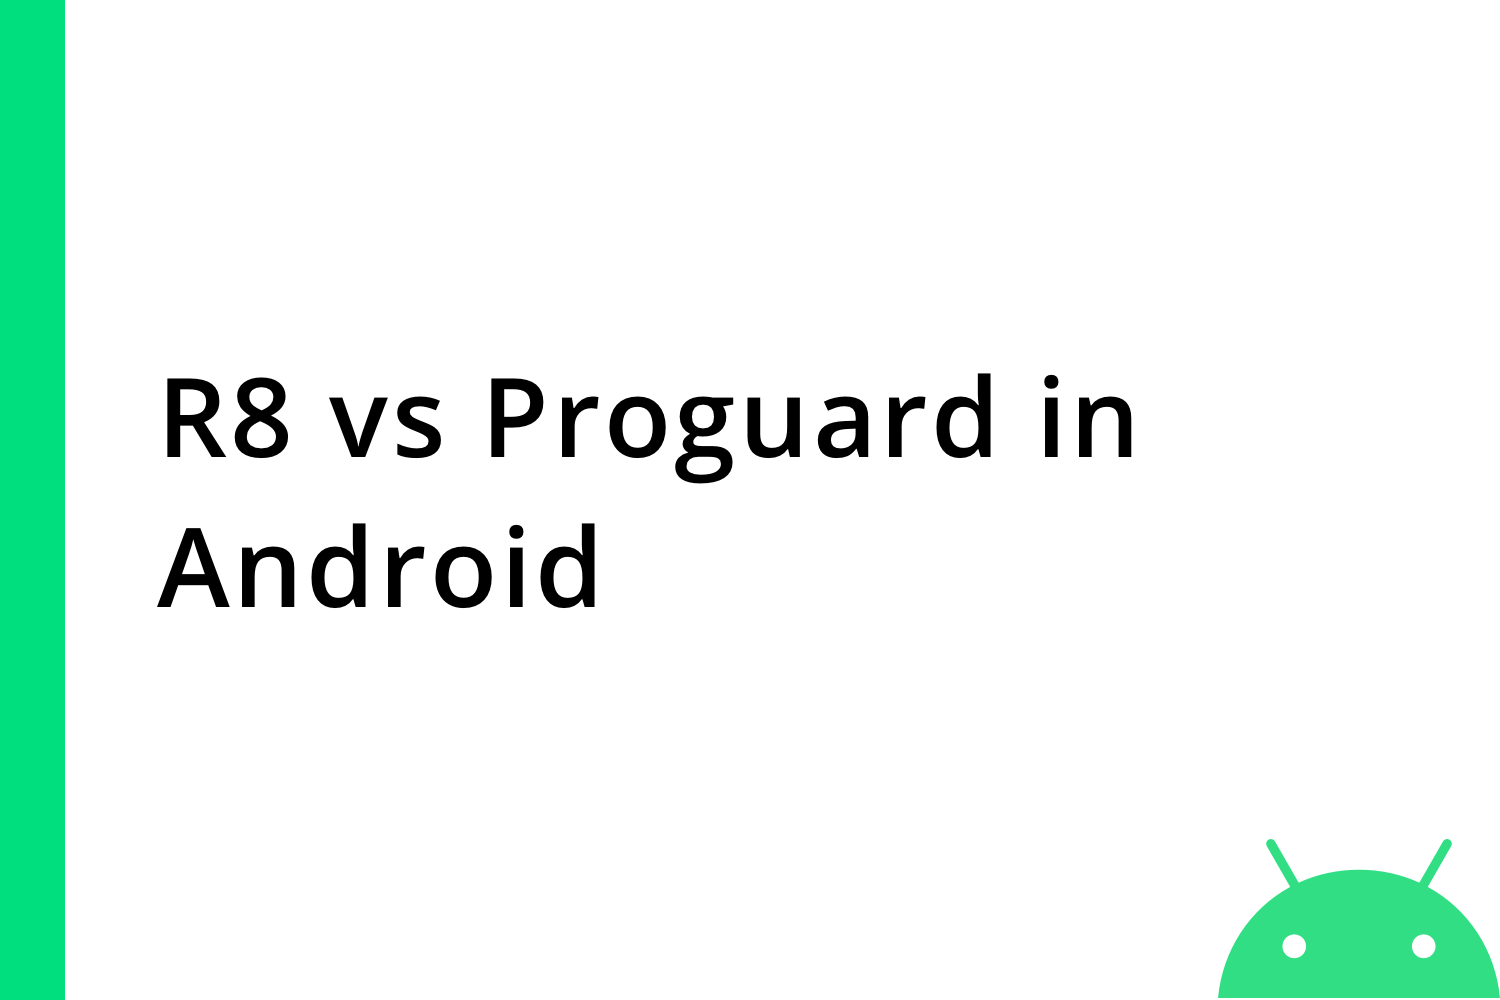 R8 vs Proguard in Android